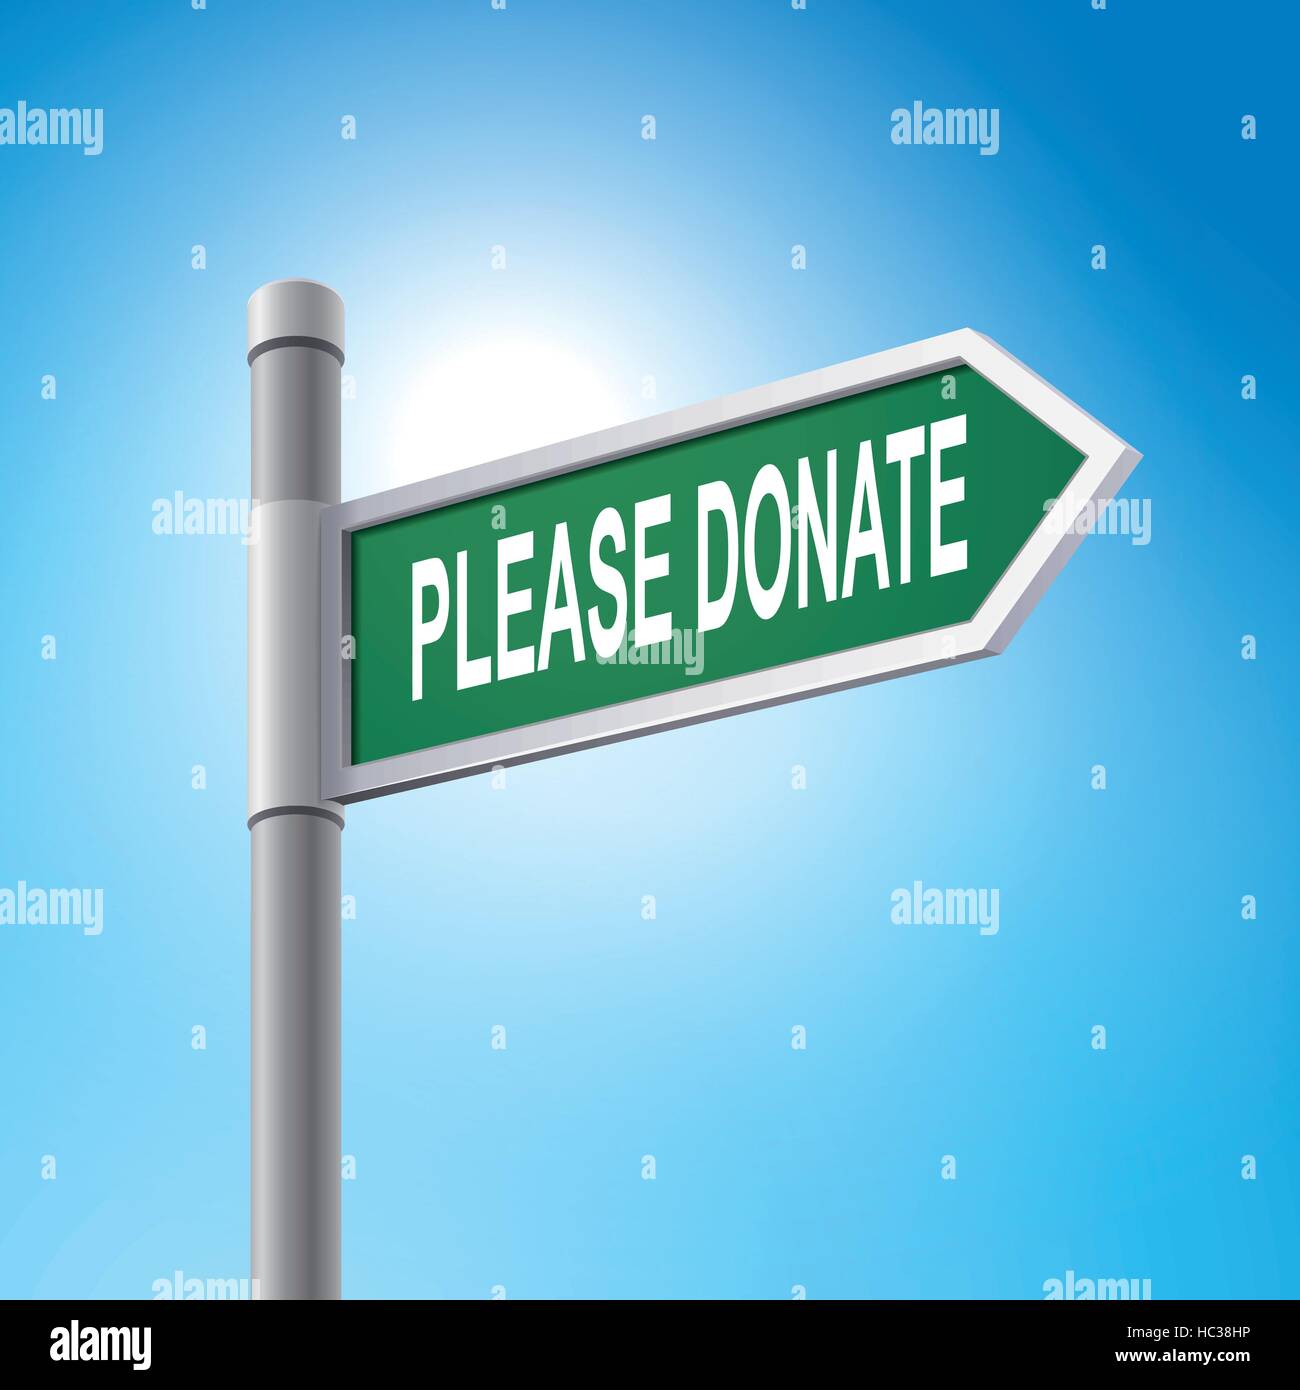 PLEASE DONATE stock illustration. Illustration of donate - 86670203